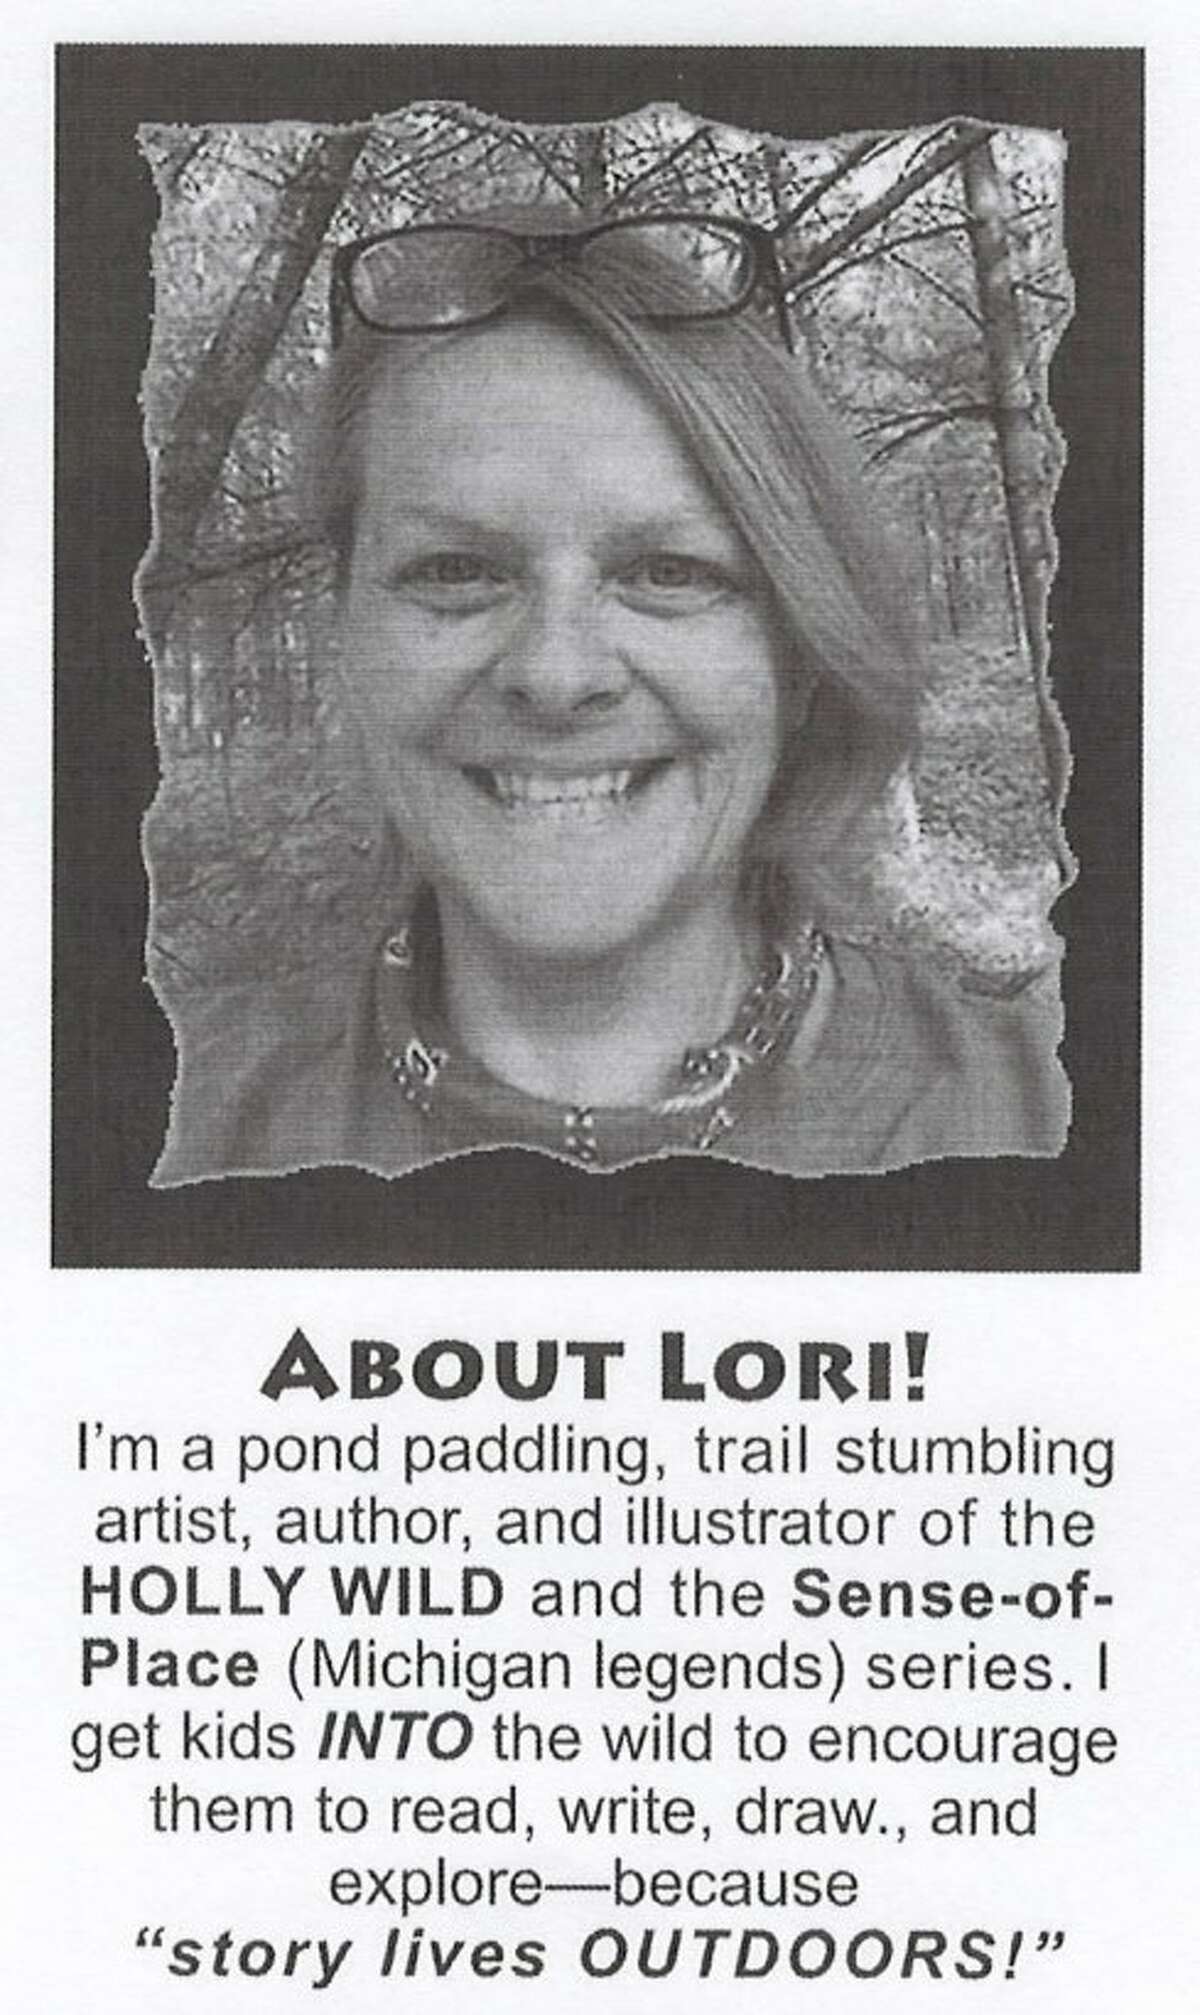 Artist, author and illustrator Lori Taylor